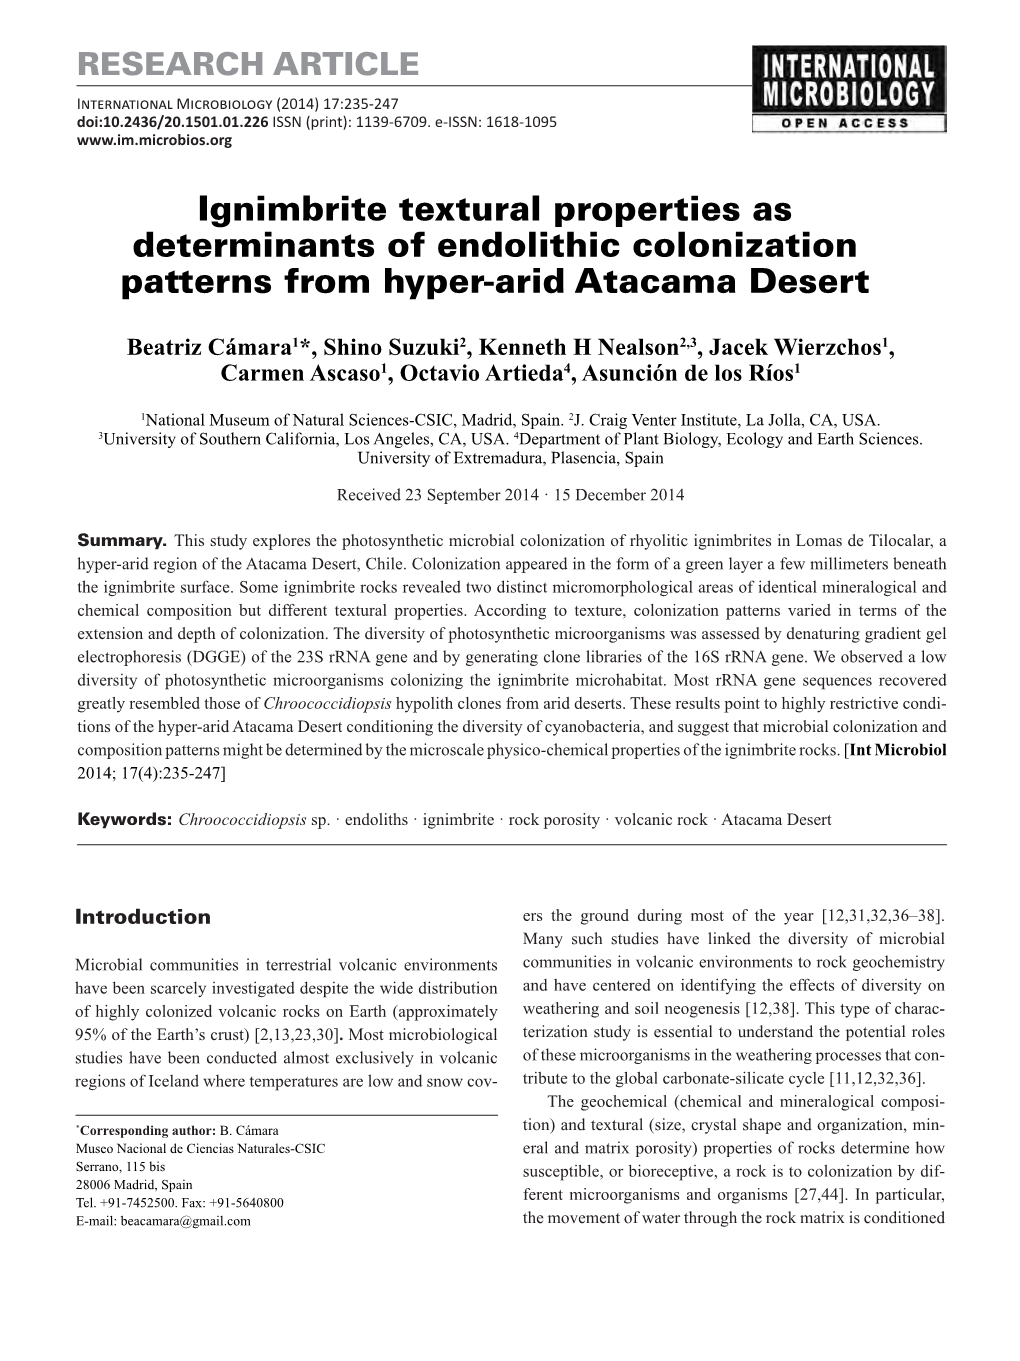 Ignimbrite Textural Properties As Determinants of Endolithic Colonization Patterns from Hyper-Arid Atacama Desert